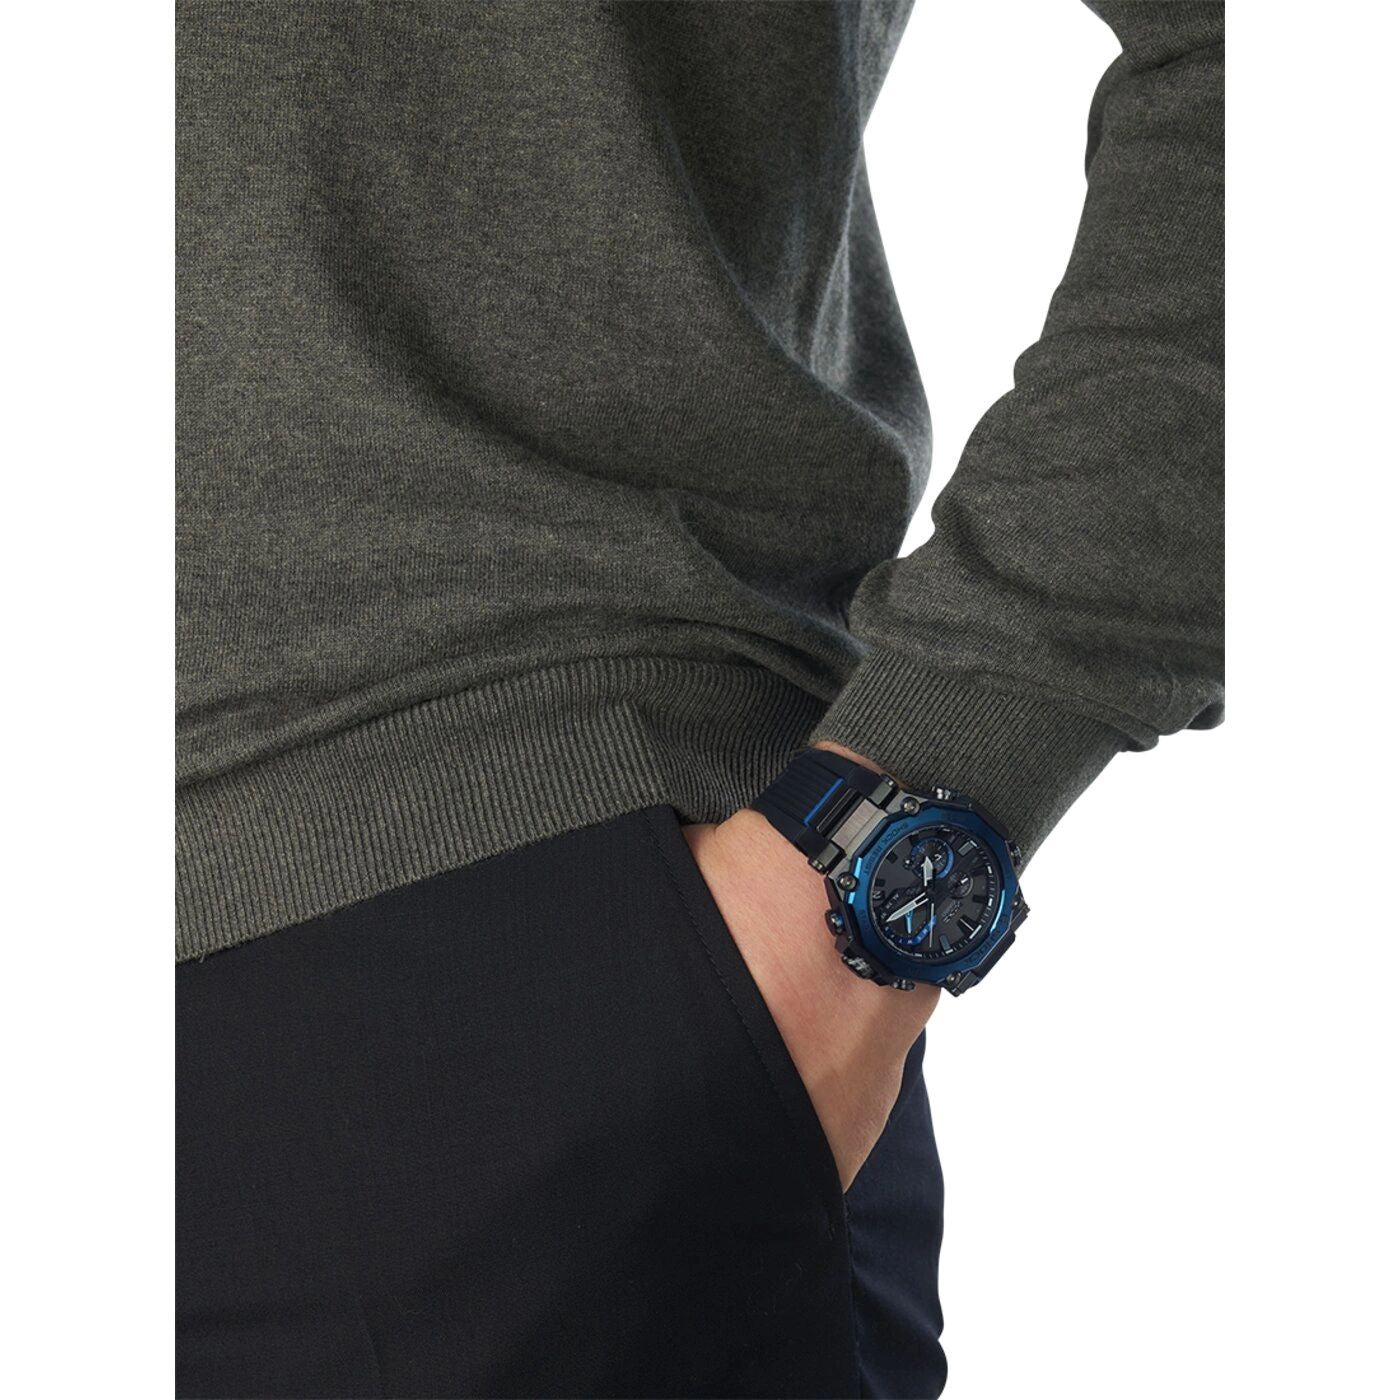 Orologio G-Shock MTG-B2000B-1A2ER acciaio nero e blu